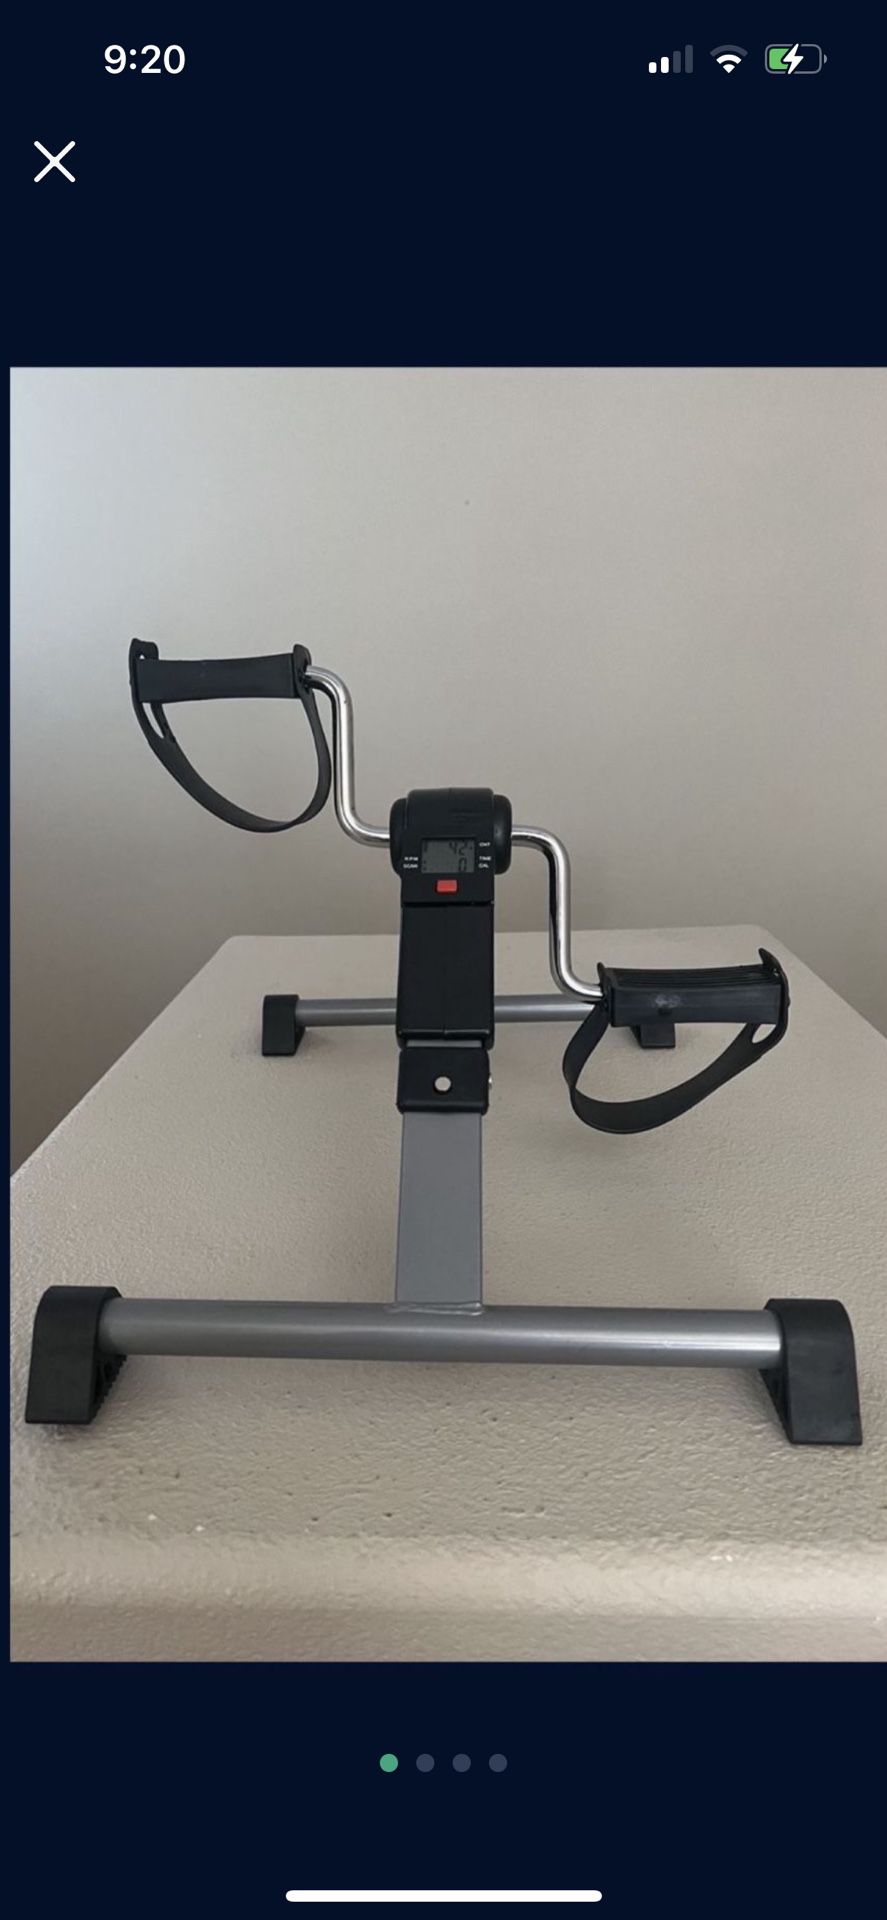 Exercise Portable Under Desk Bike Fitness Workout Equipment 